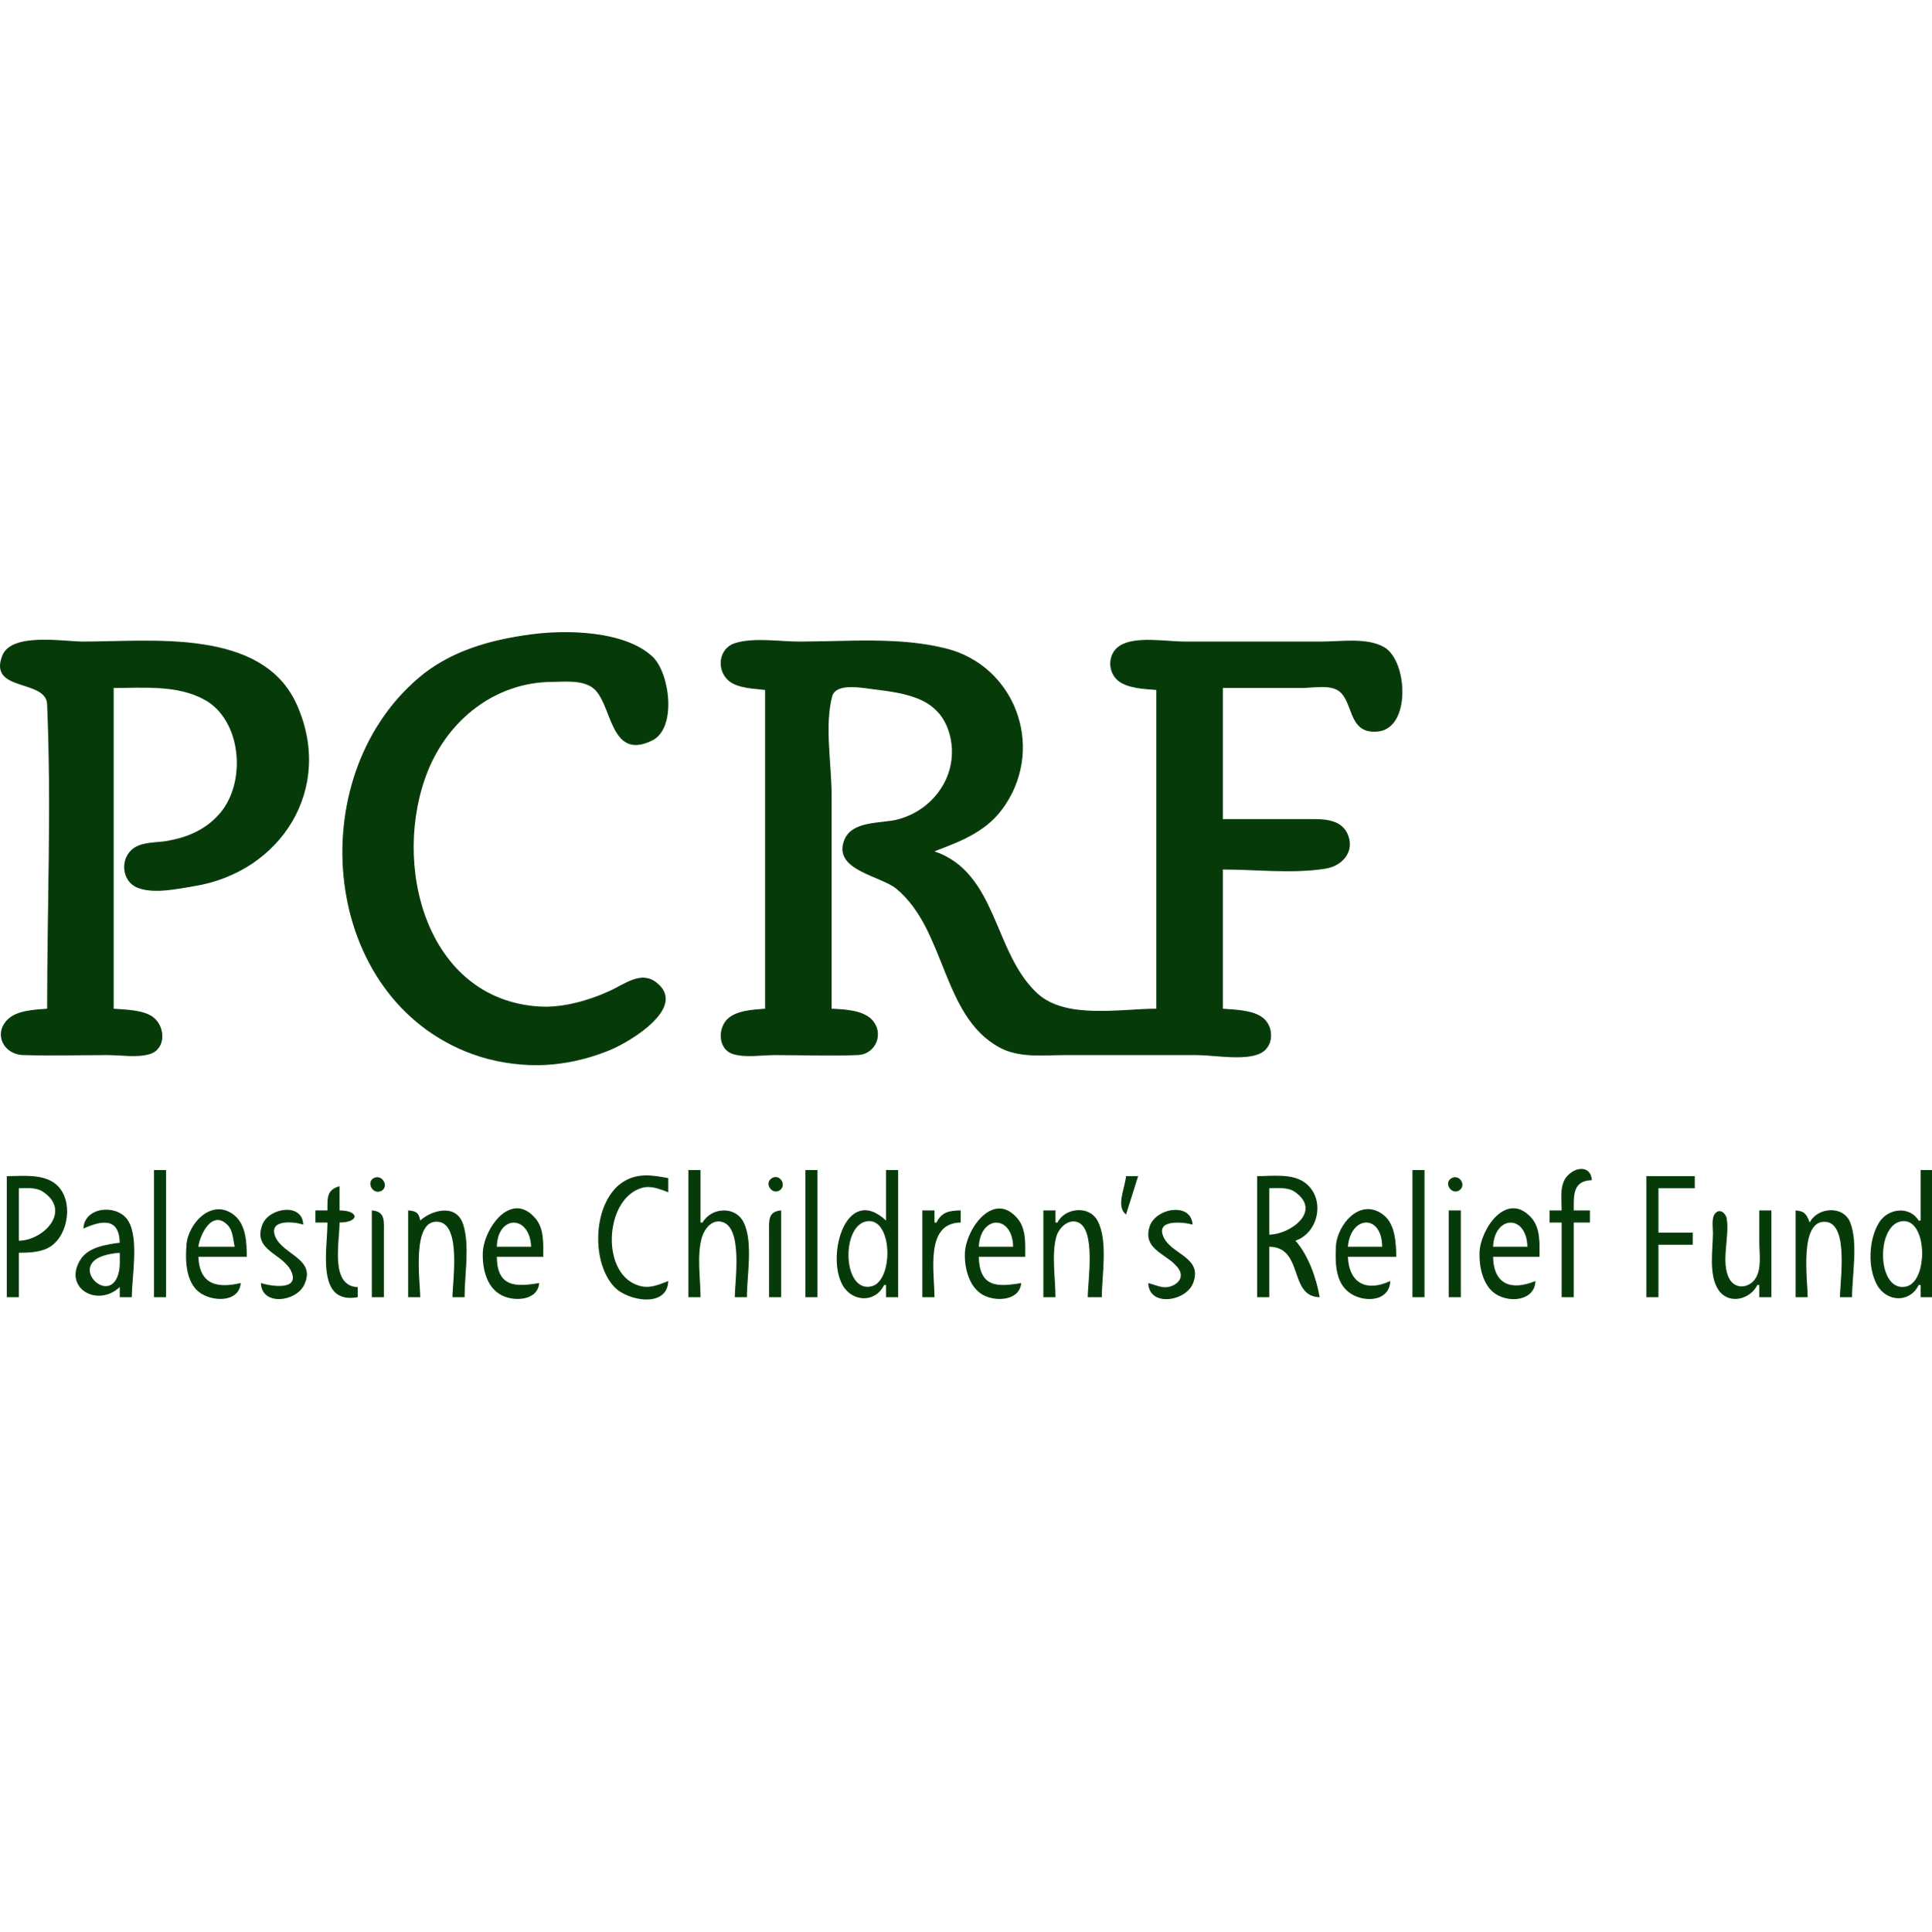 PCRF Text Logo  Transparent Clipart